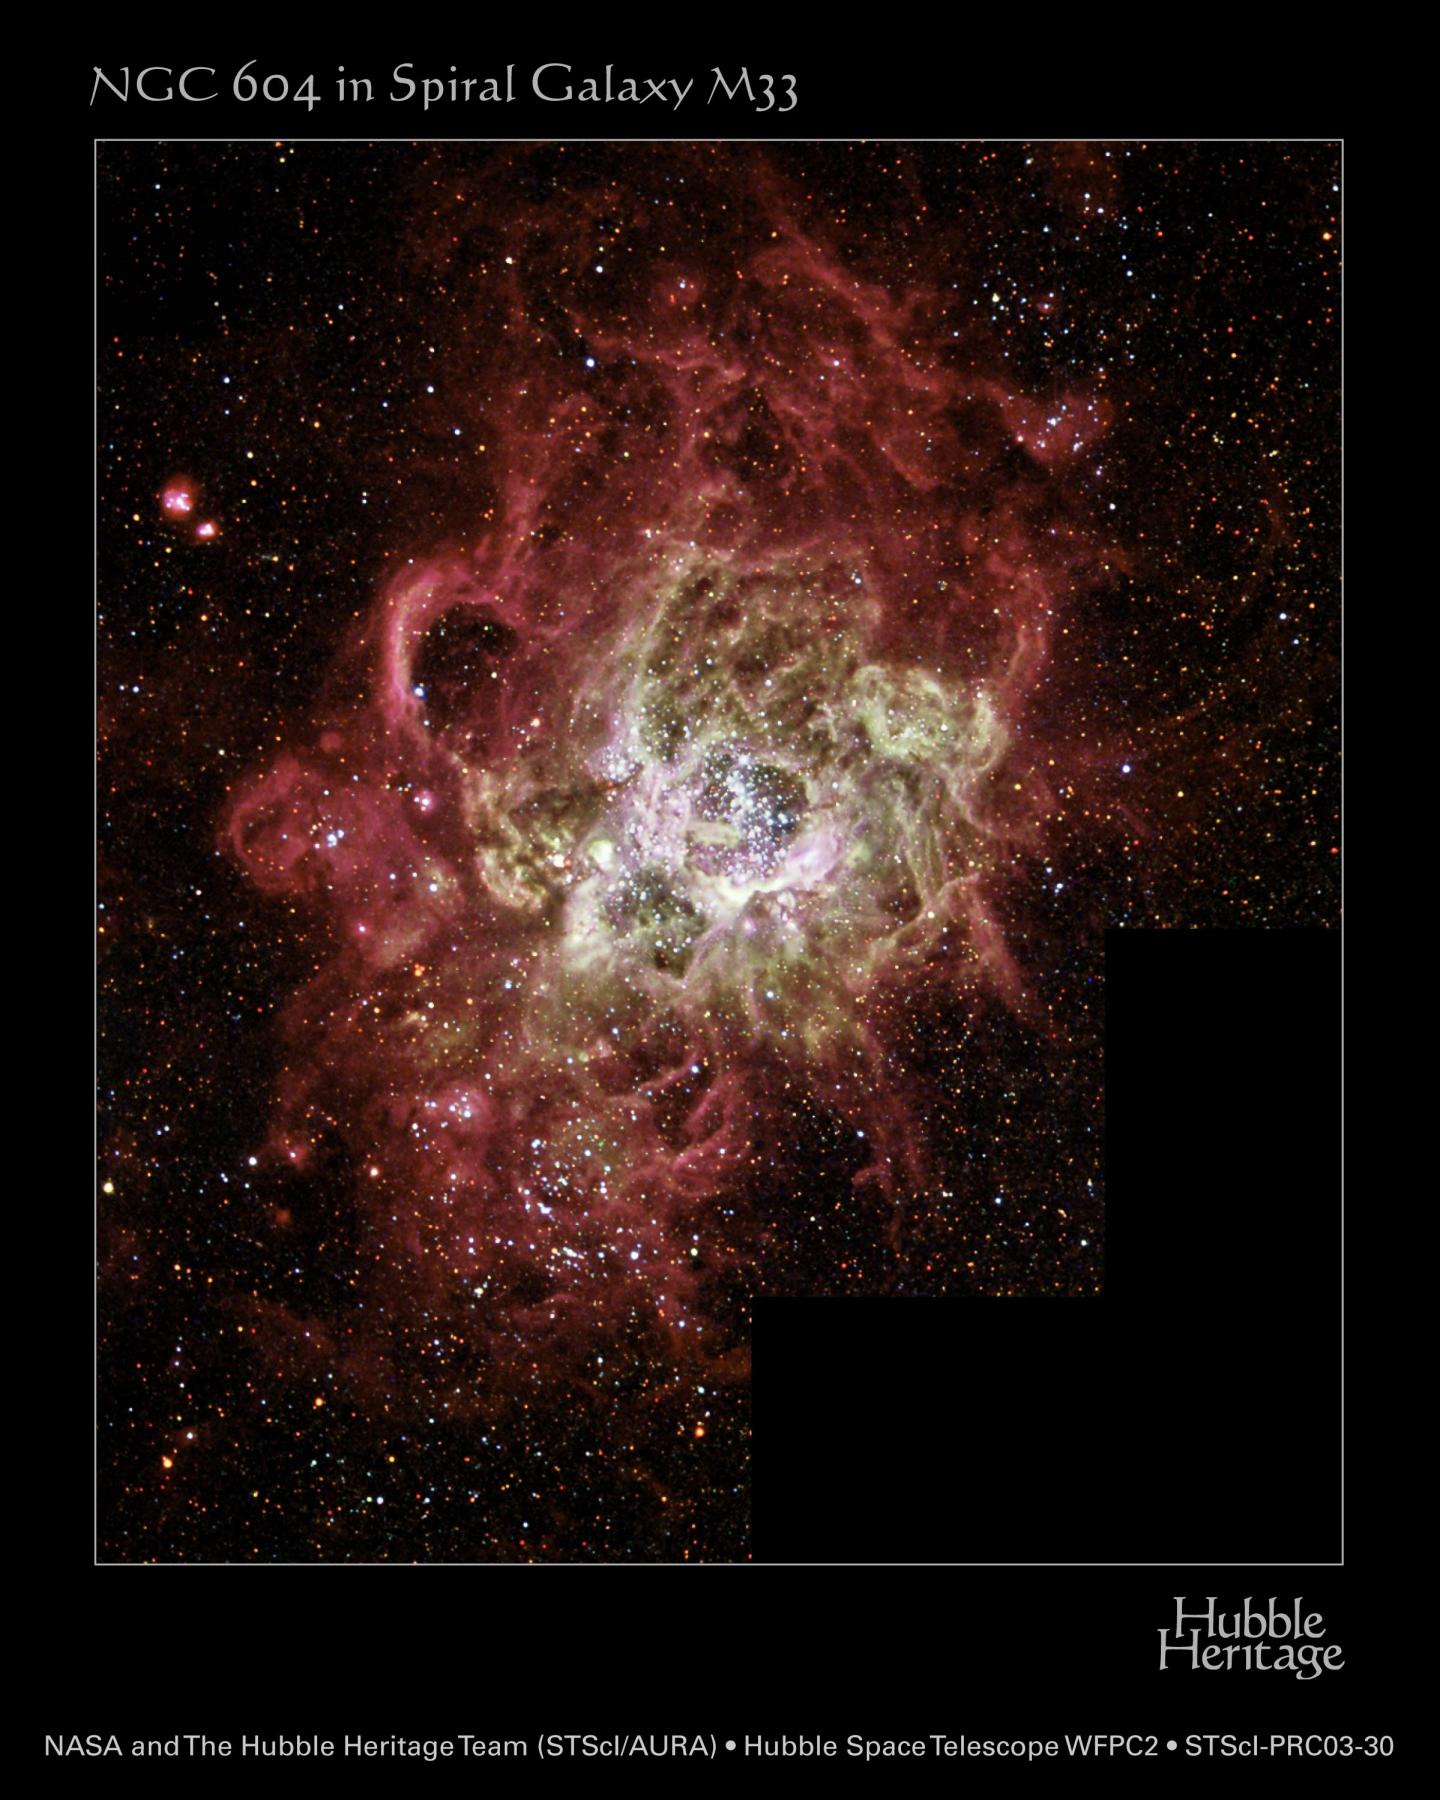 Image of Stellar Nursery NGC 604